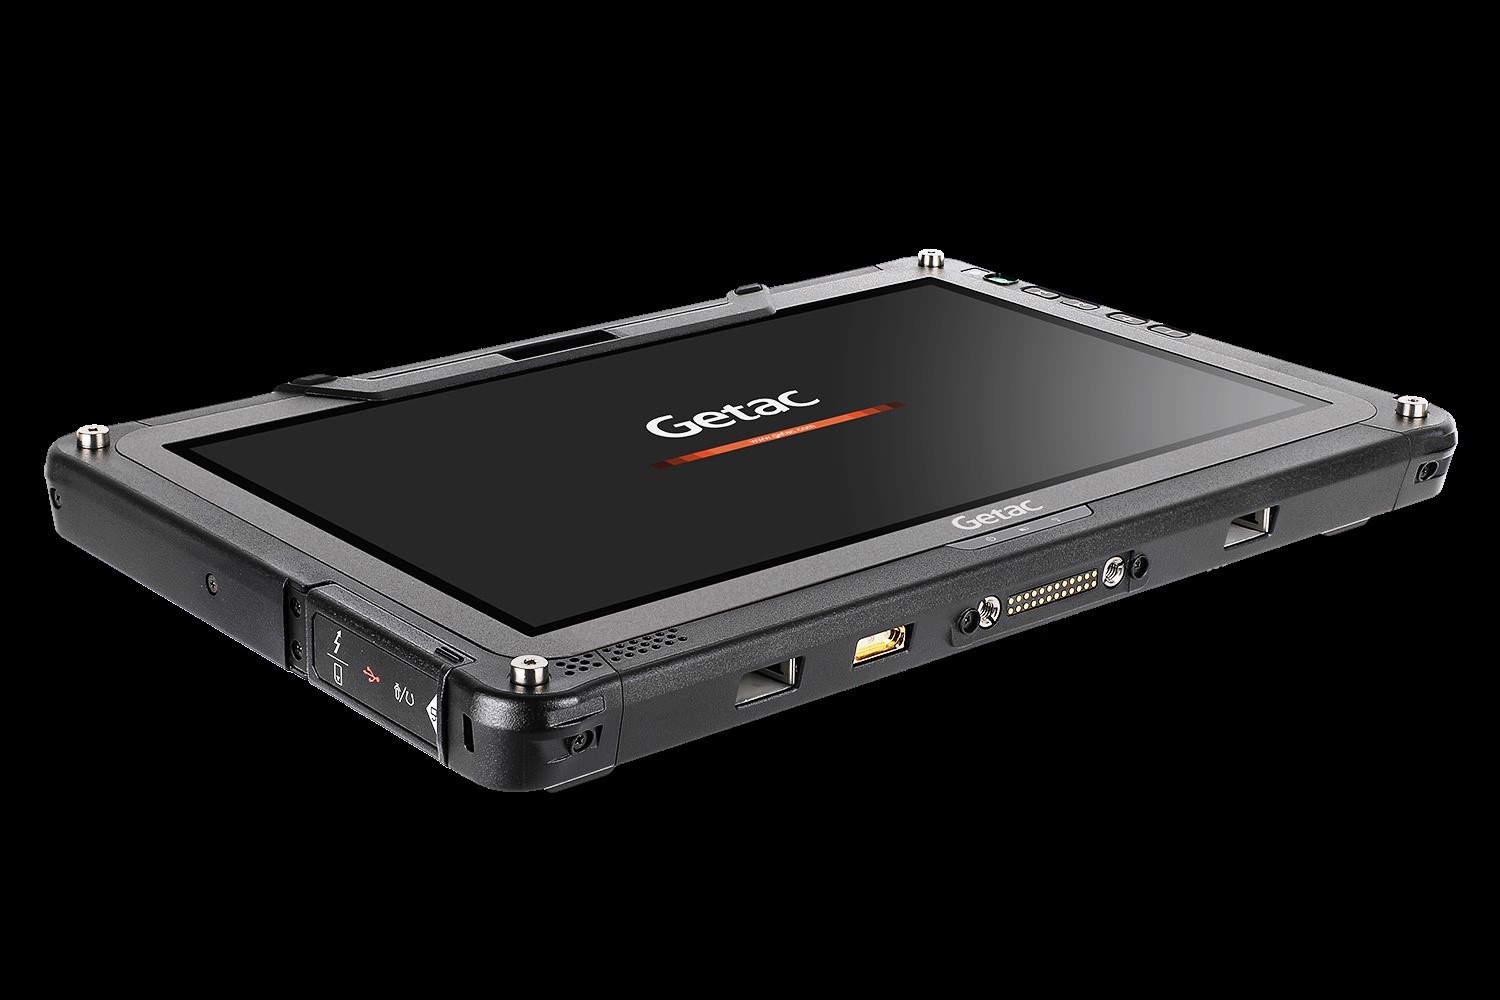 Getac launches next-gen F110 tablet